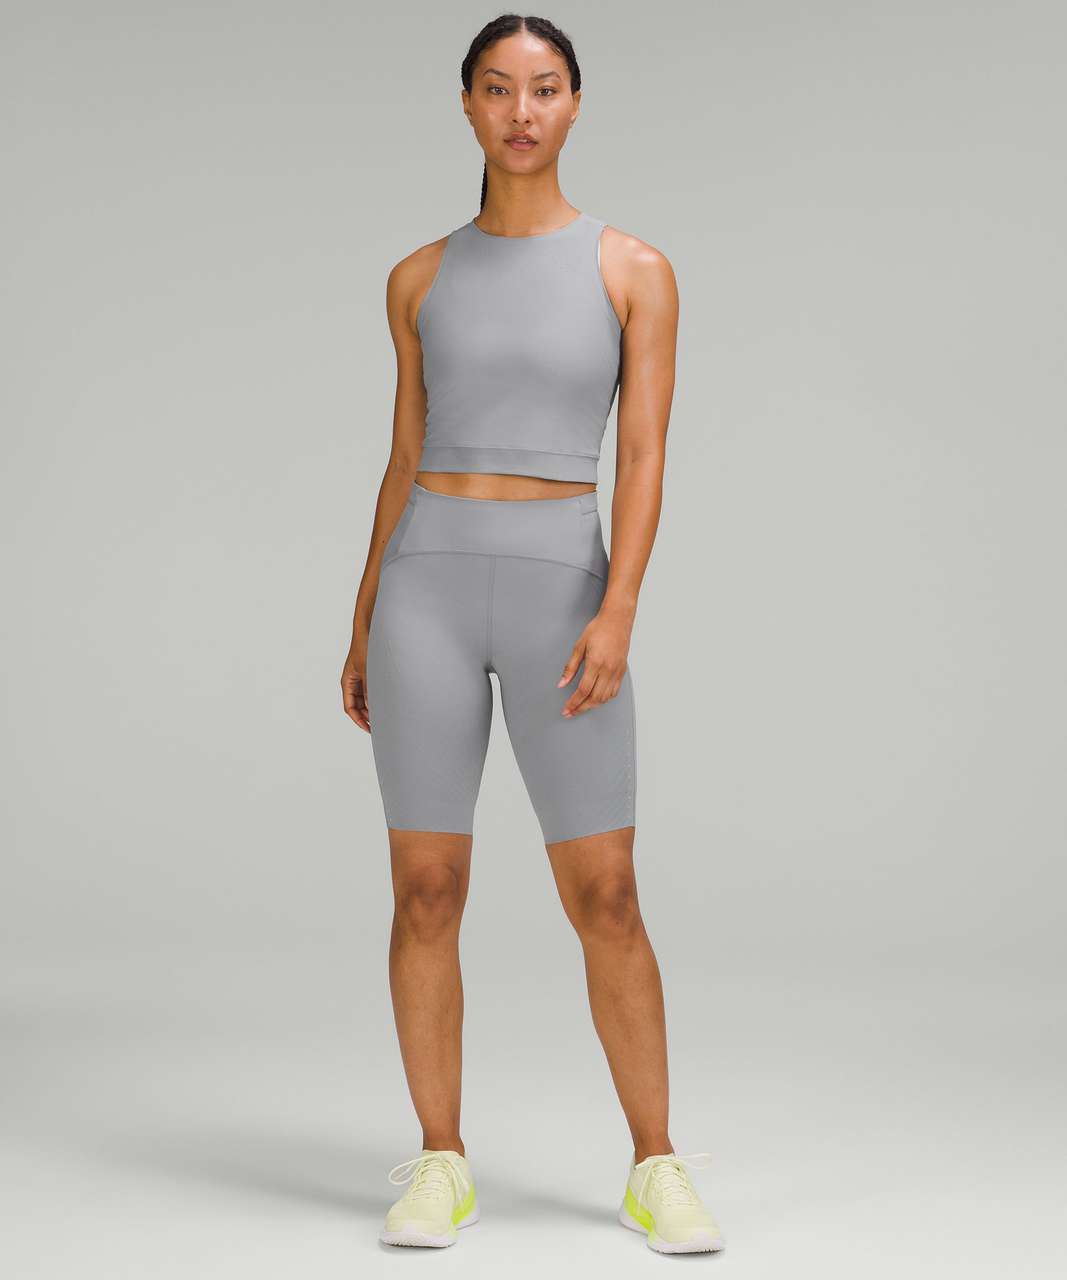 Lululemon SenseKnit Running High Rise Short - Athletic apparel